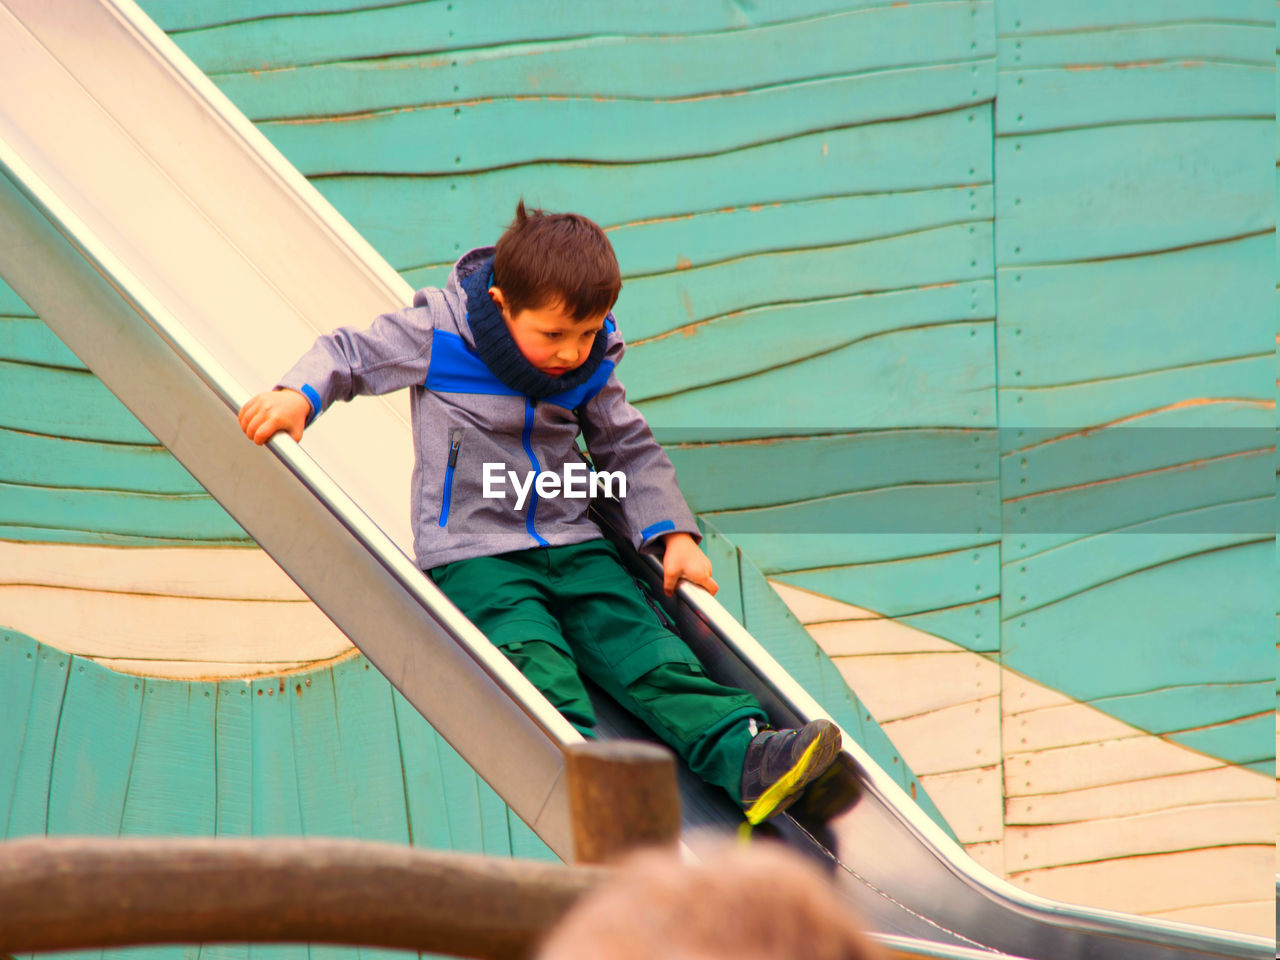 Cute boy playing on slide